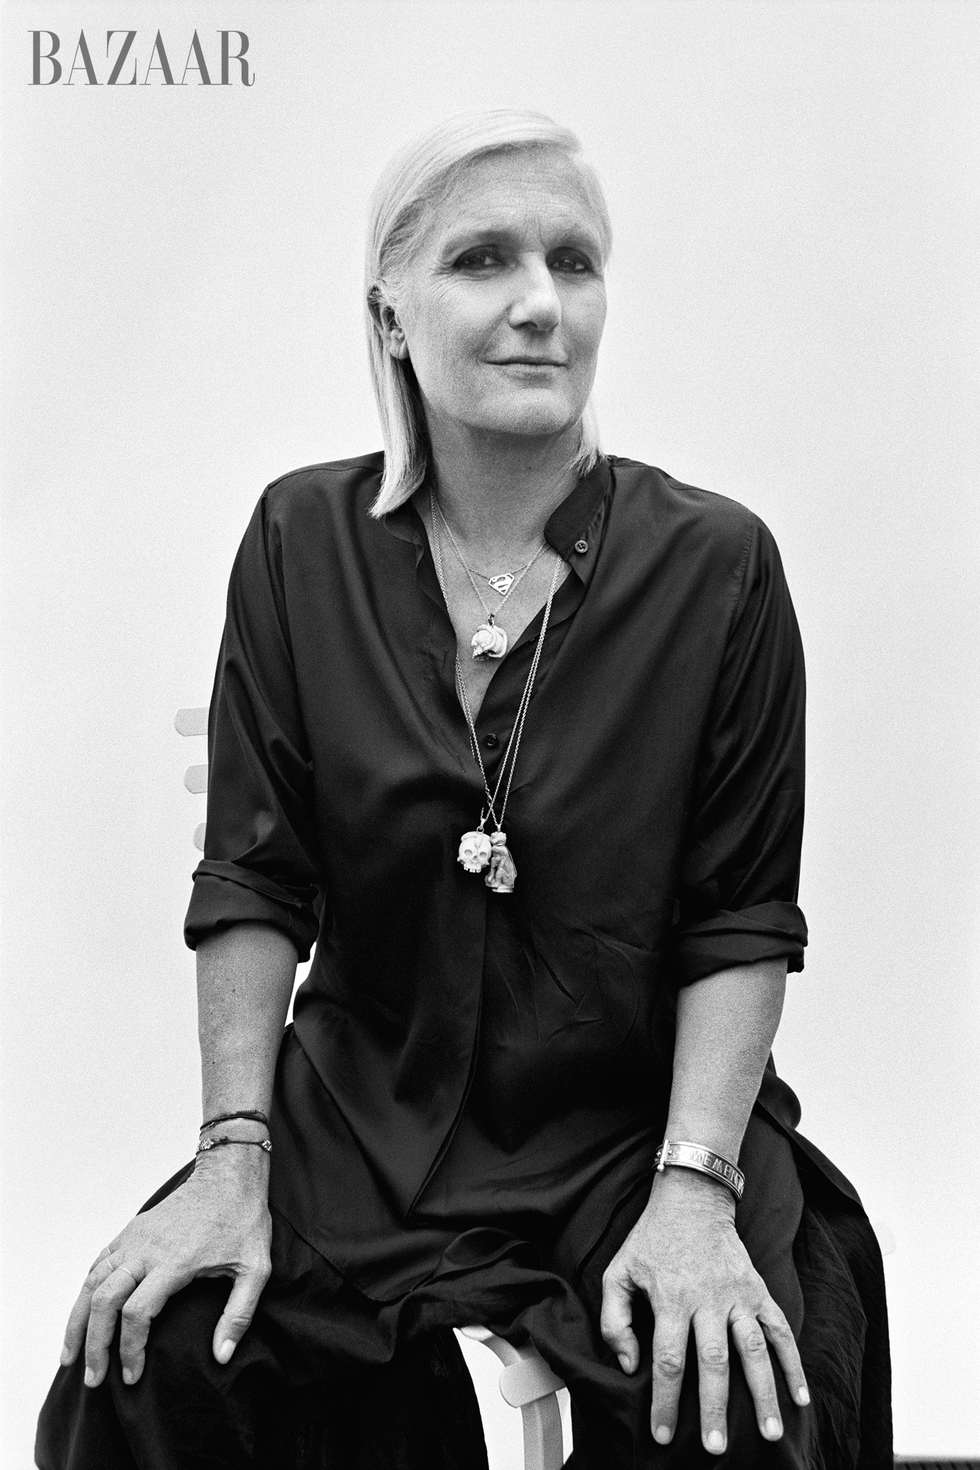 Dior's Maria Grazia Chiuri on Designing Clothes for Difficult Times